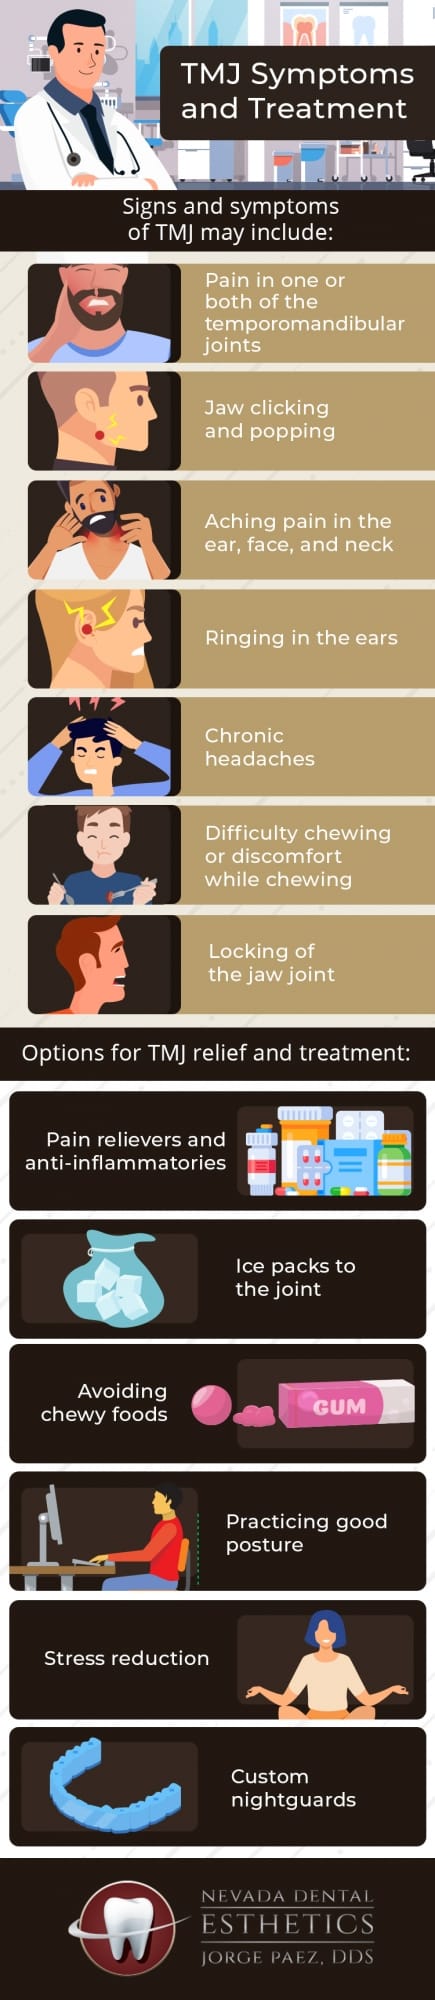 tmj symptoms treatment